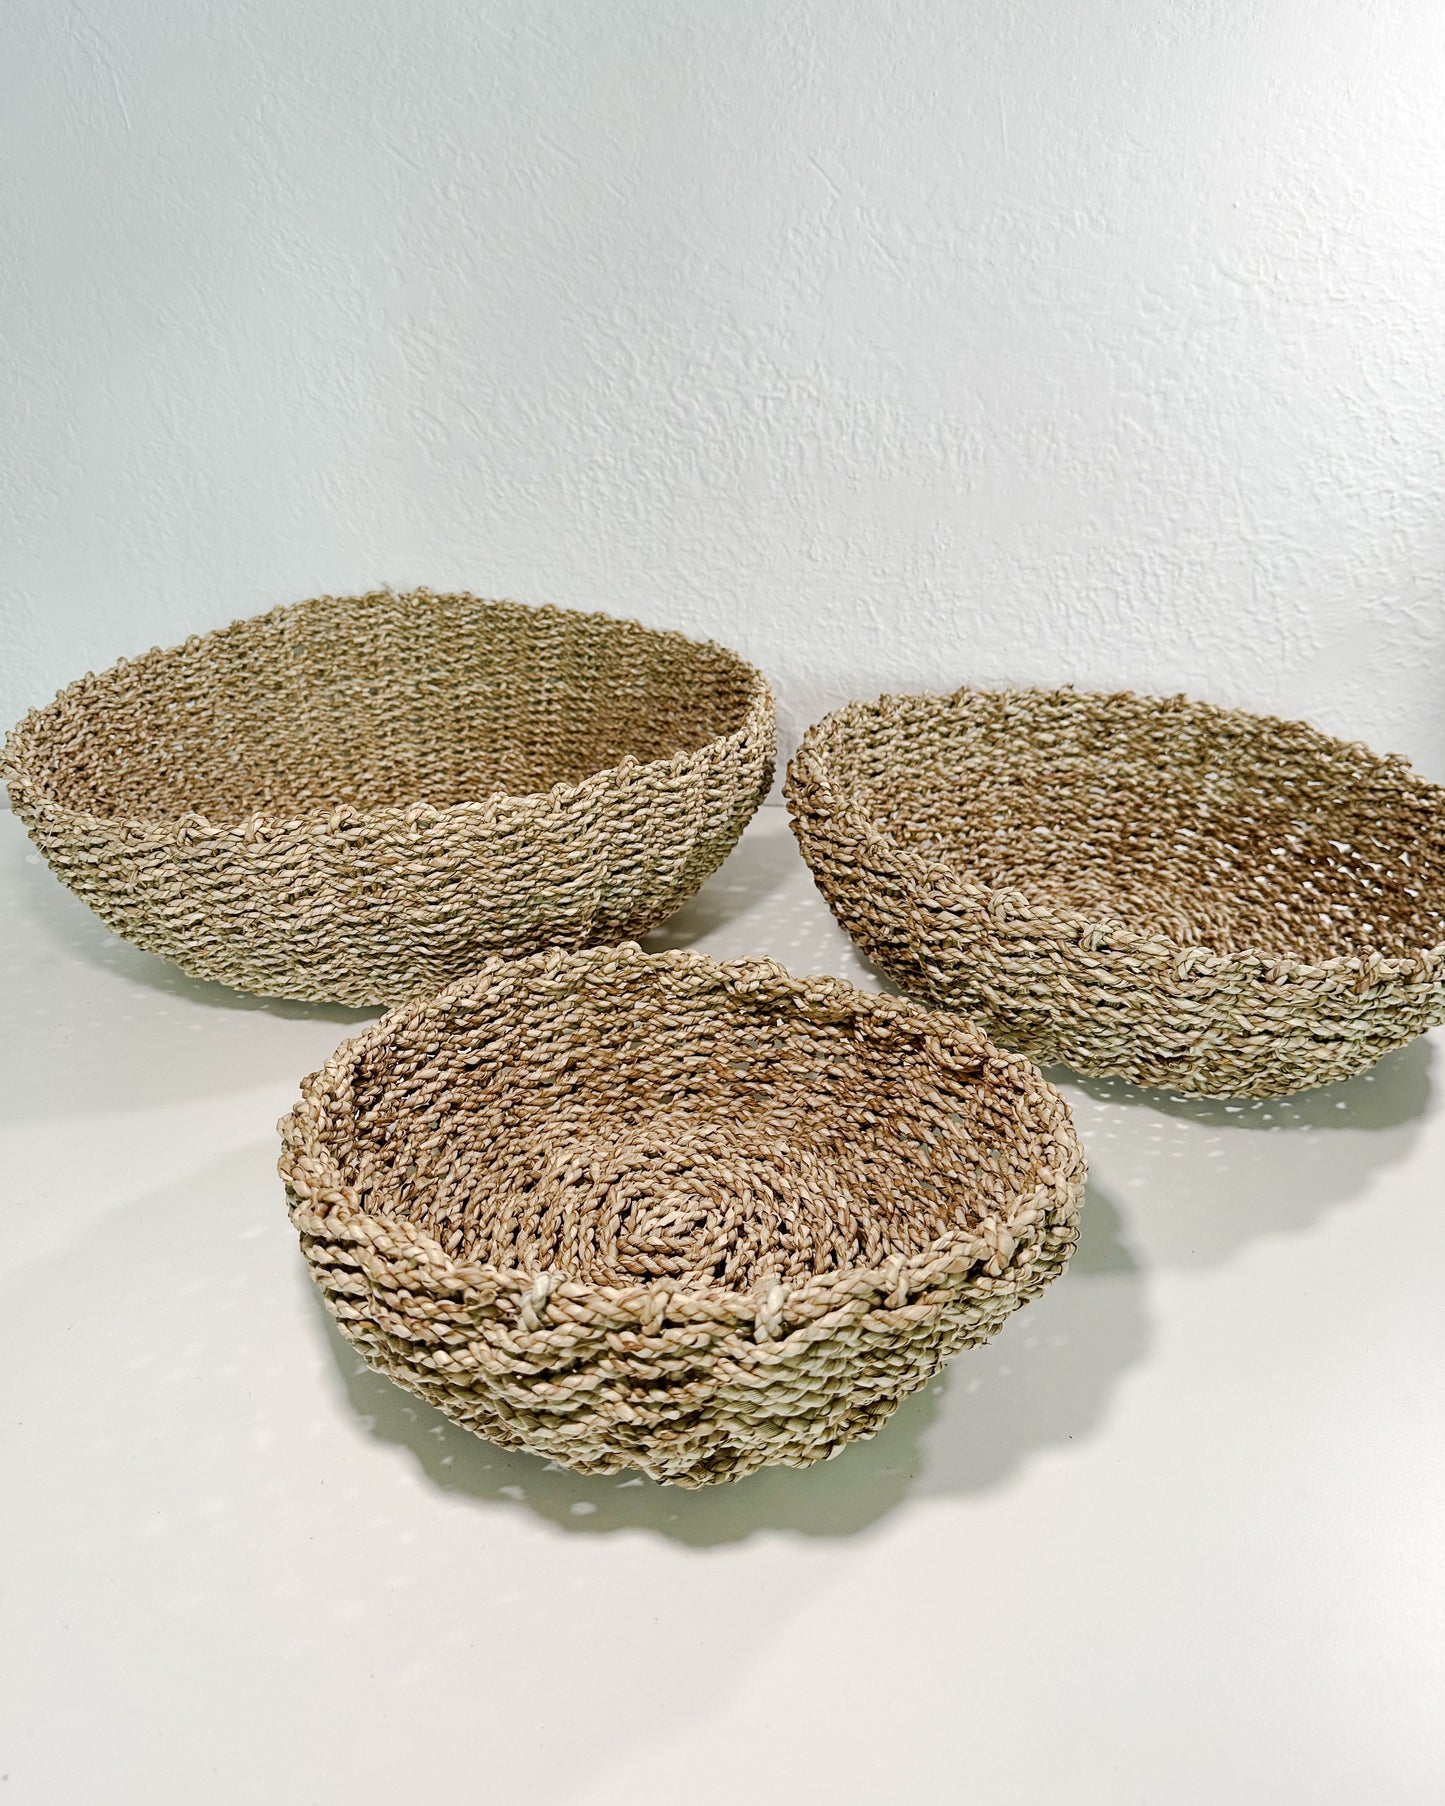 Mimpi Woven Pandan Baskets (Set of 3)  - Natural